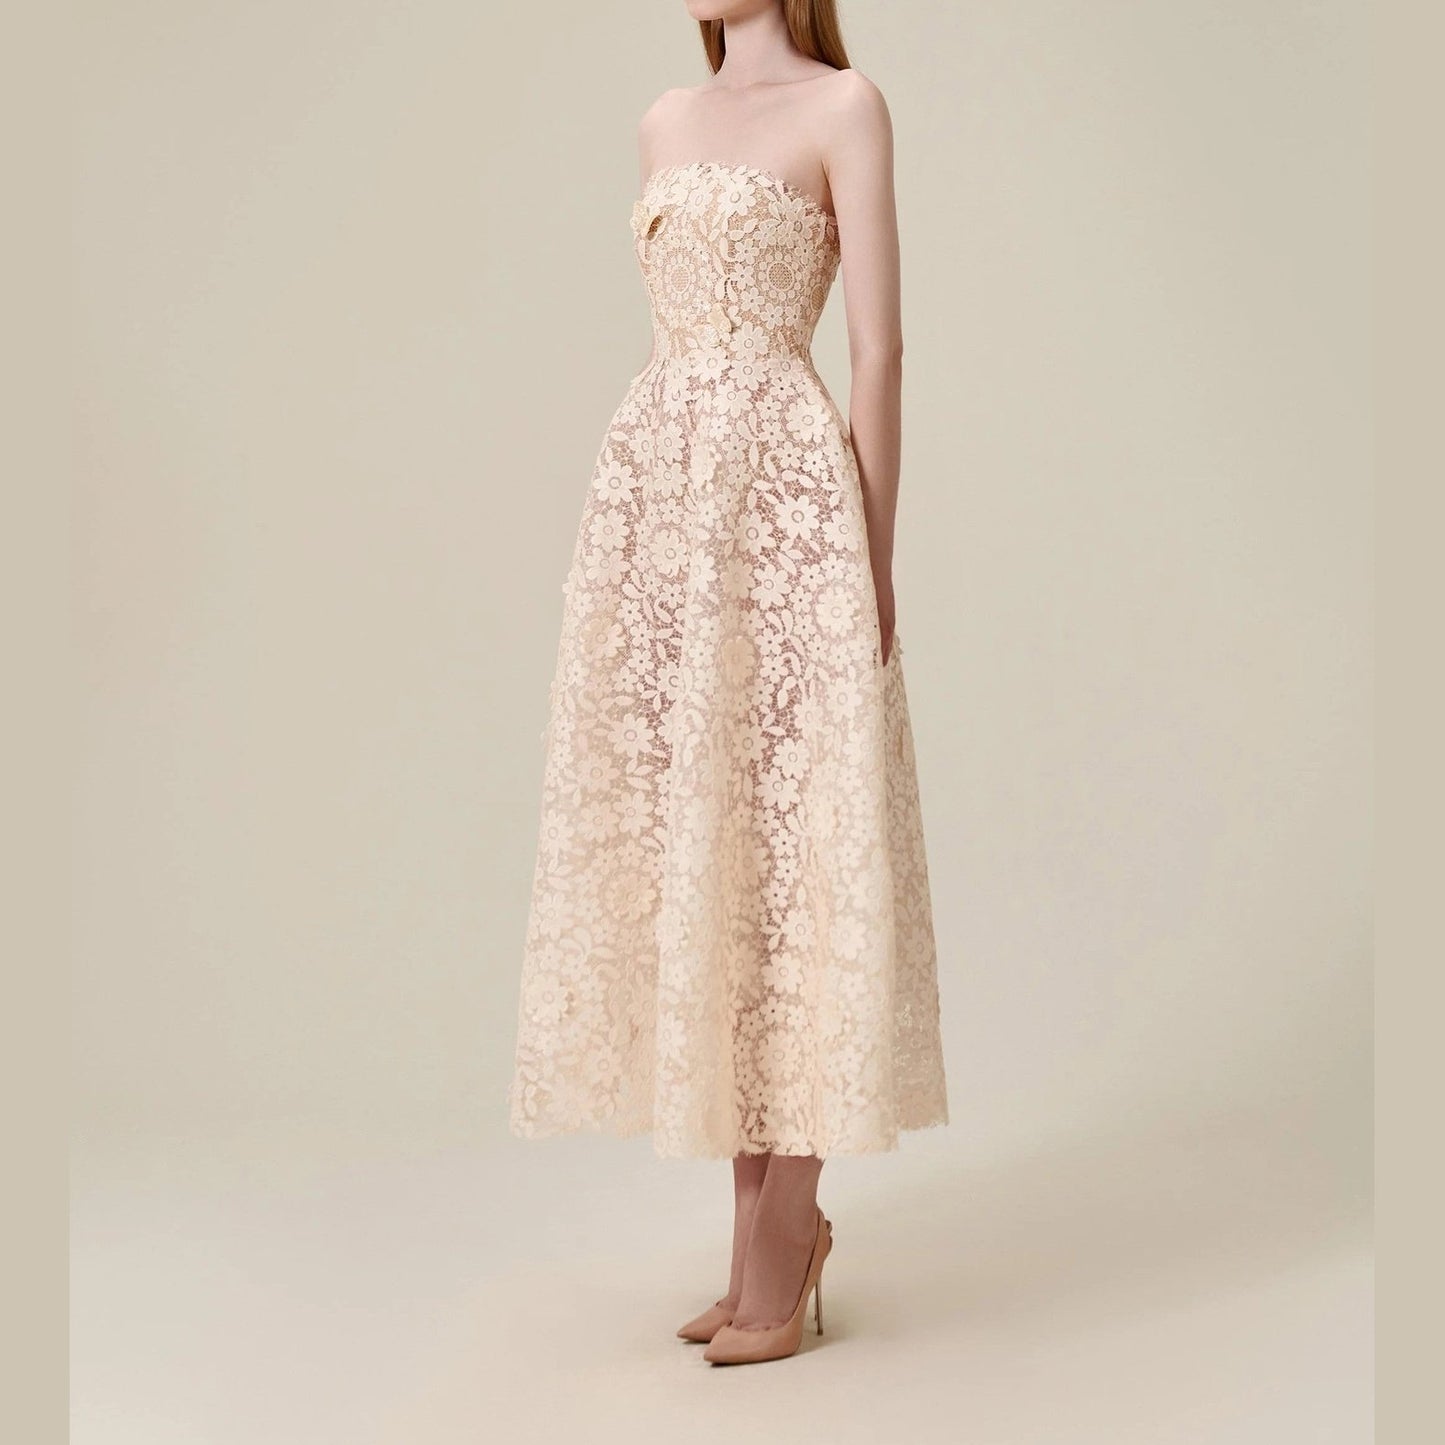 CINDY | Lace Midi Dress strapless summer wedding guest dress  - Cielie